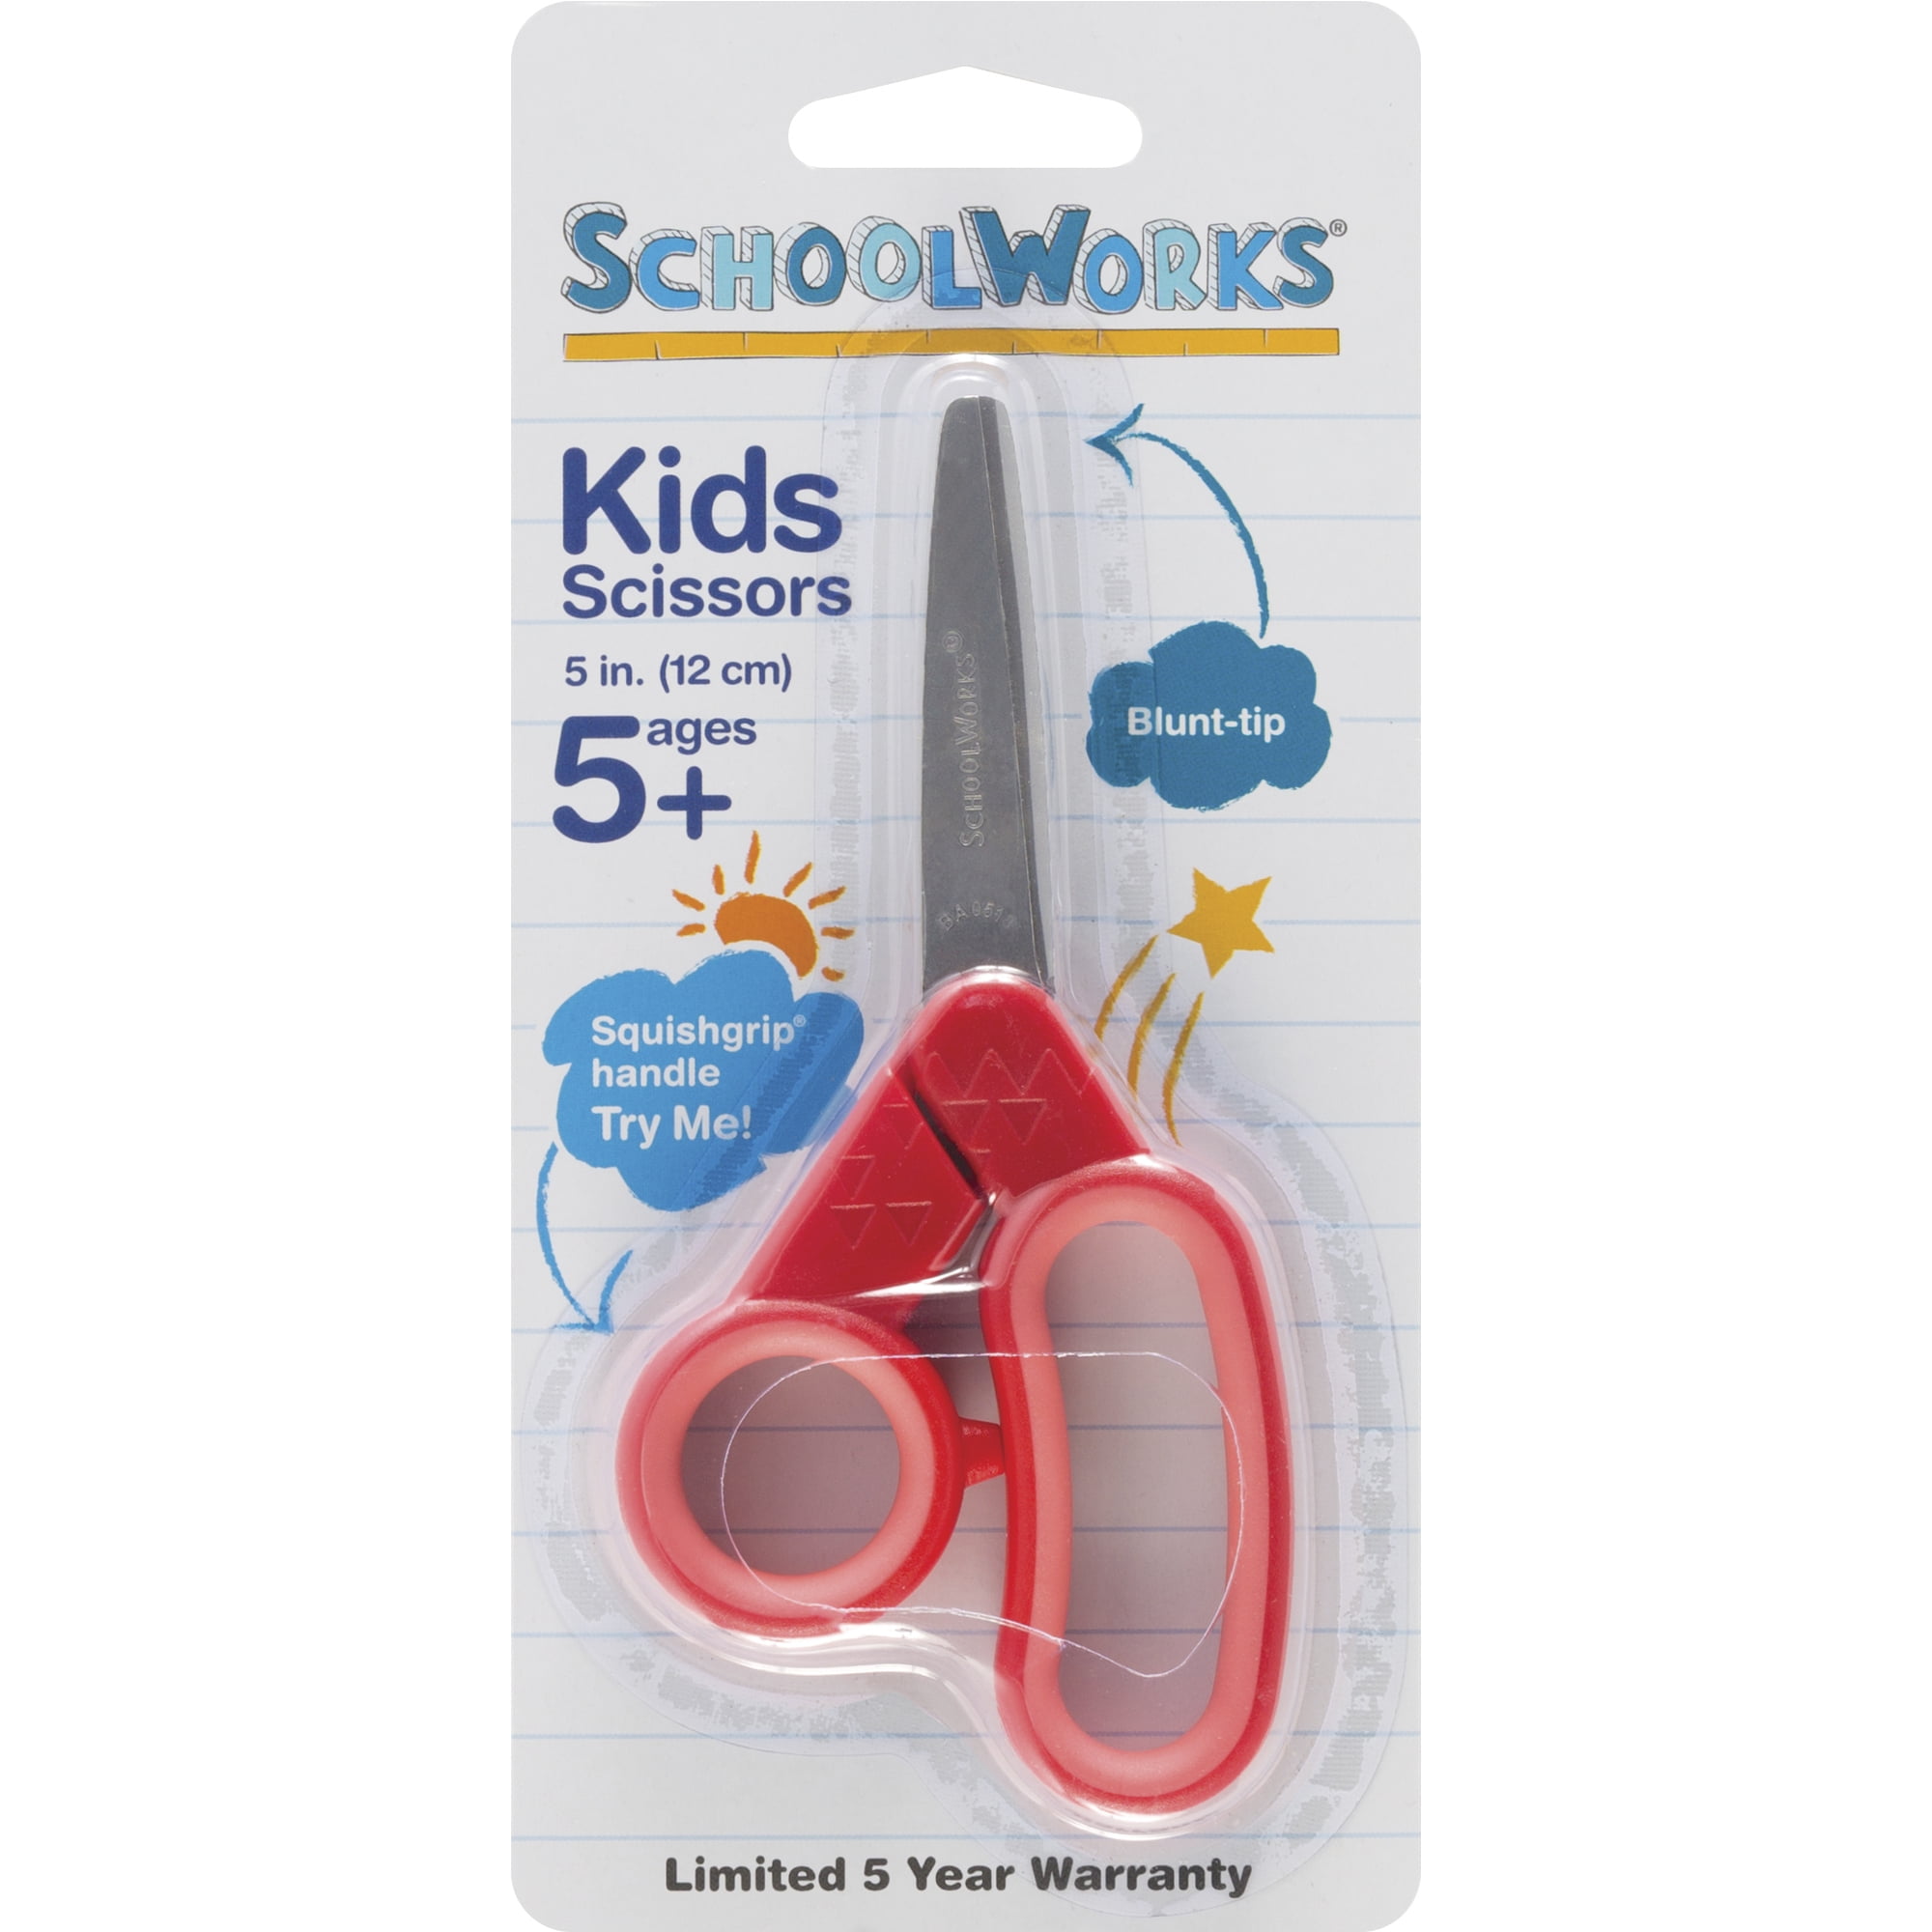 Scissor Tips for Kindergarten - Simply Kinder